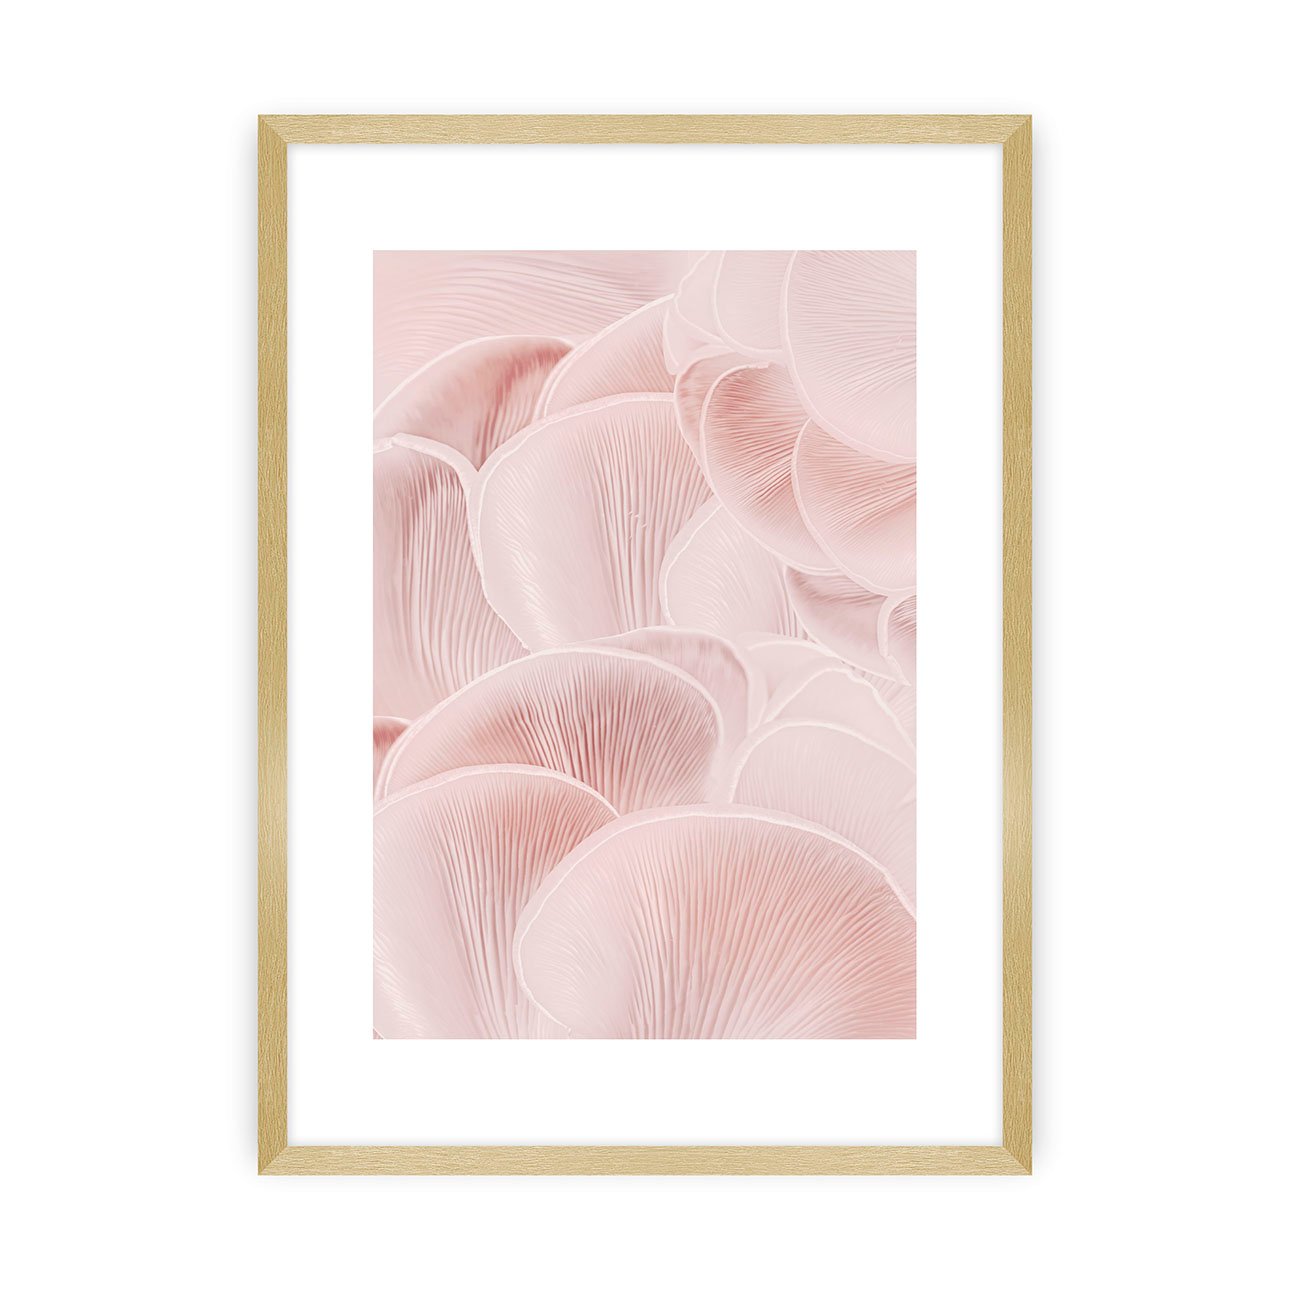 Dekoria Plakát Pastel Pink I, 70 x 100 cm, Zvolit rámek: Zlatý